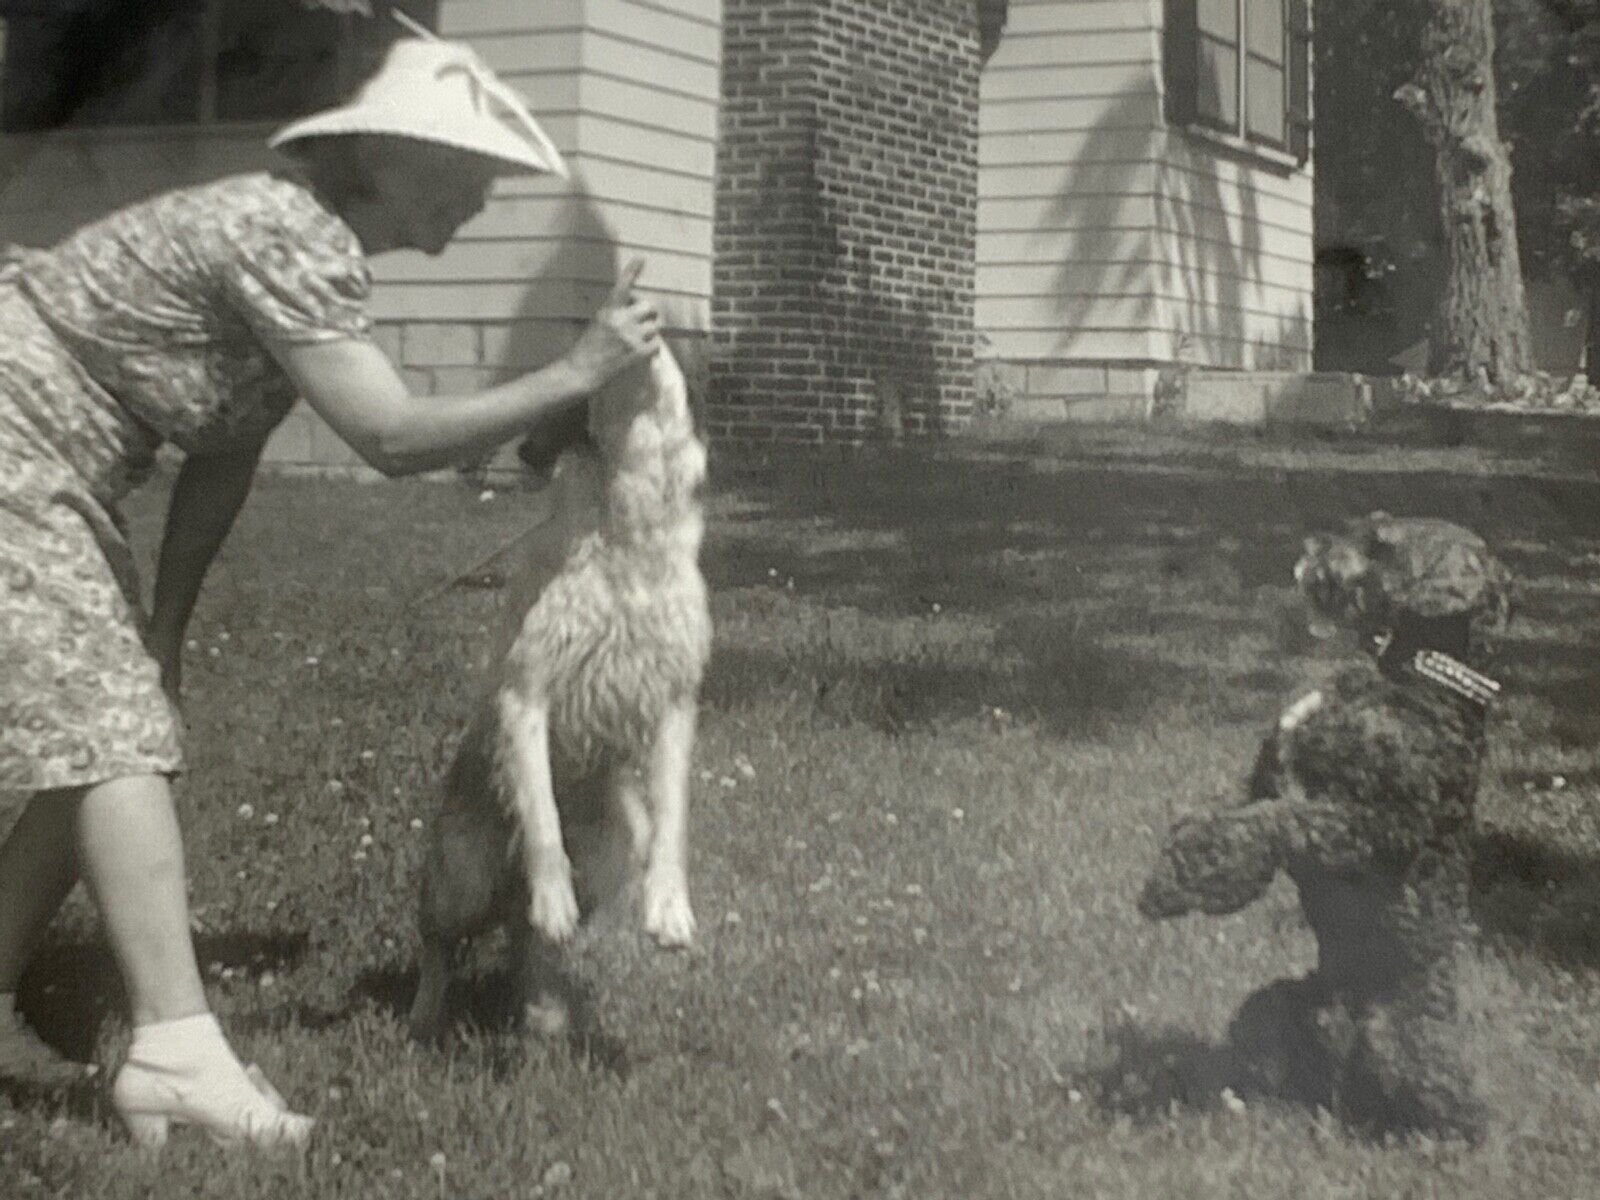 (AdC) Vintage Original FOUND PHOTO Photograph Snapshot Woman With 2 Dog Tricks 